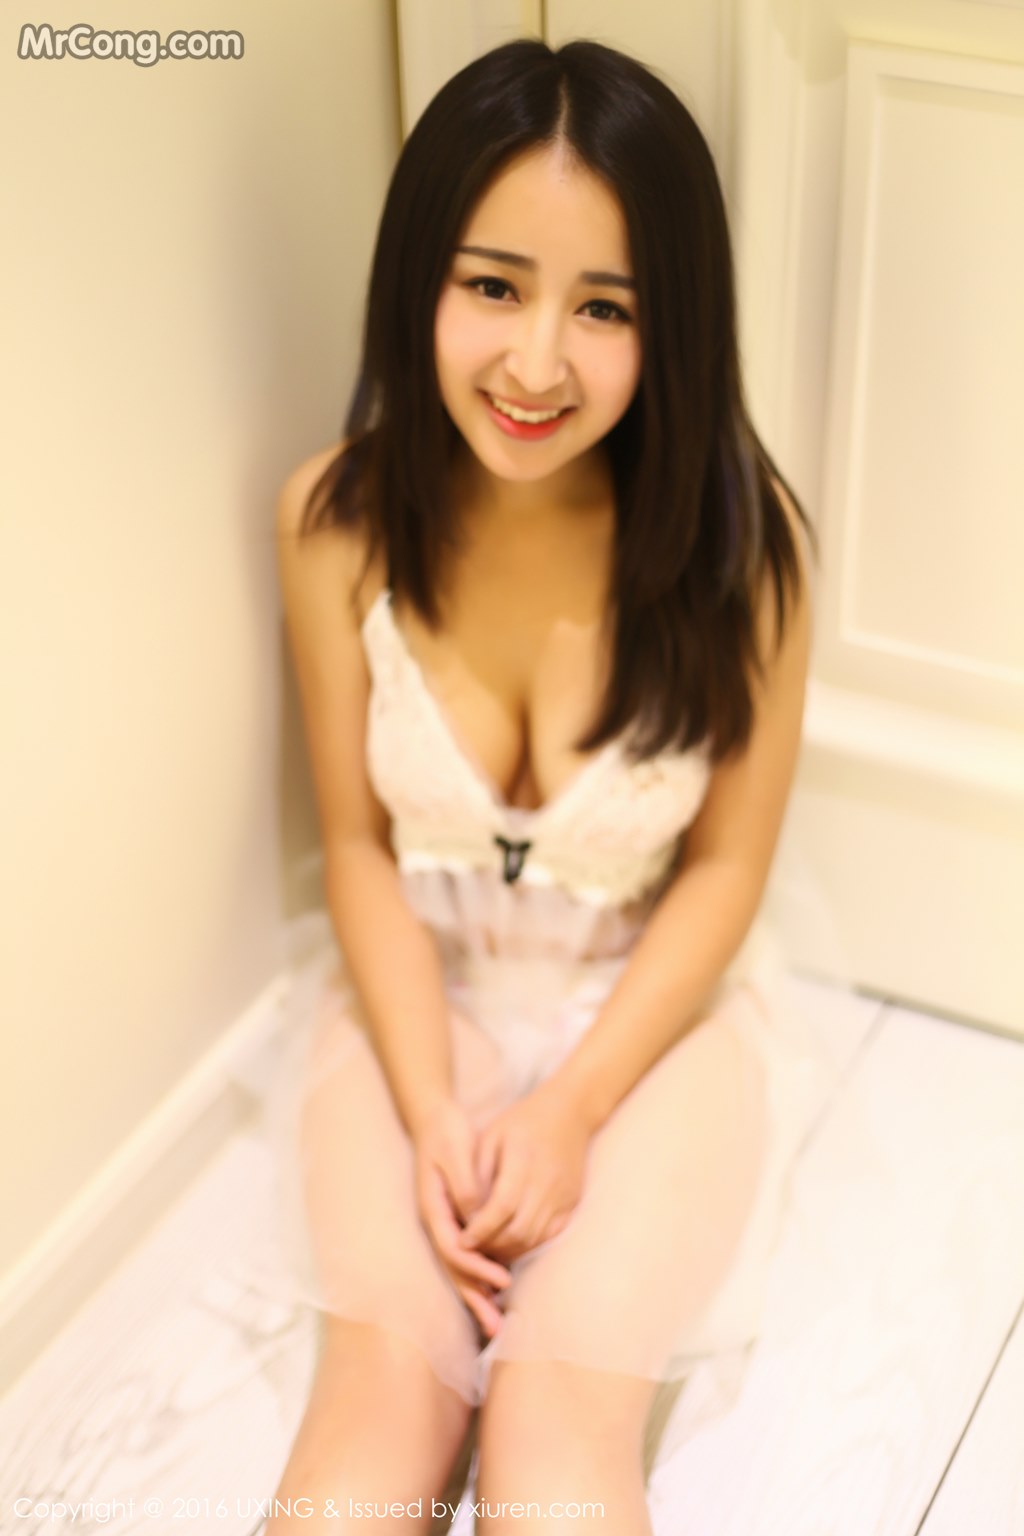 UXING Vol.036: Sunny's model (煊 煊) (54 photos)